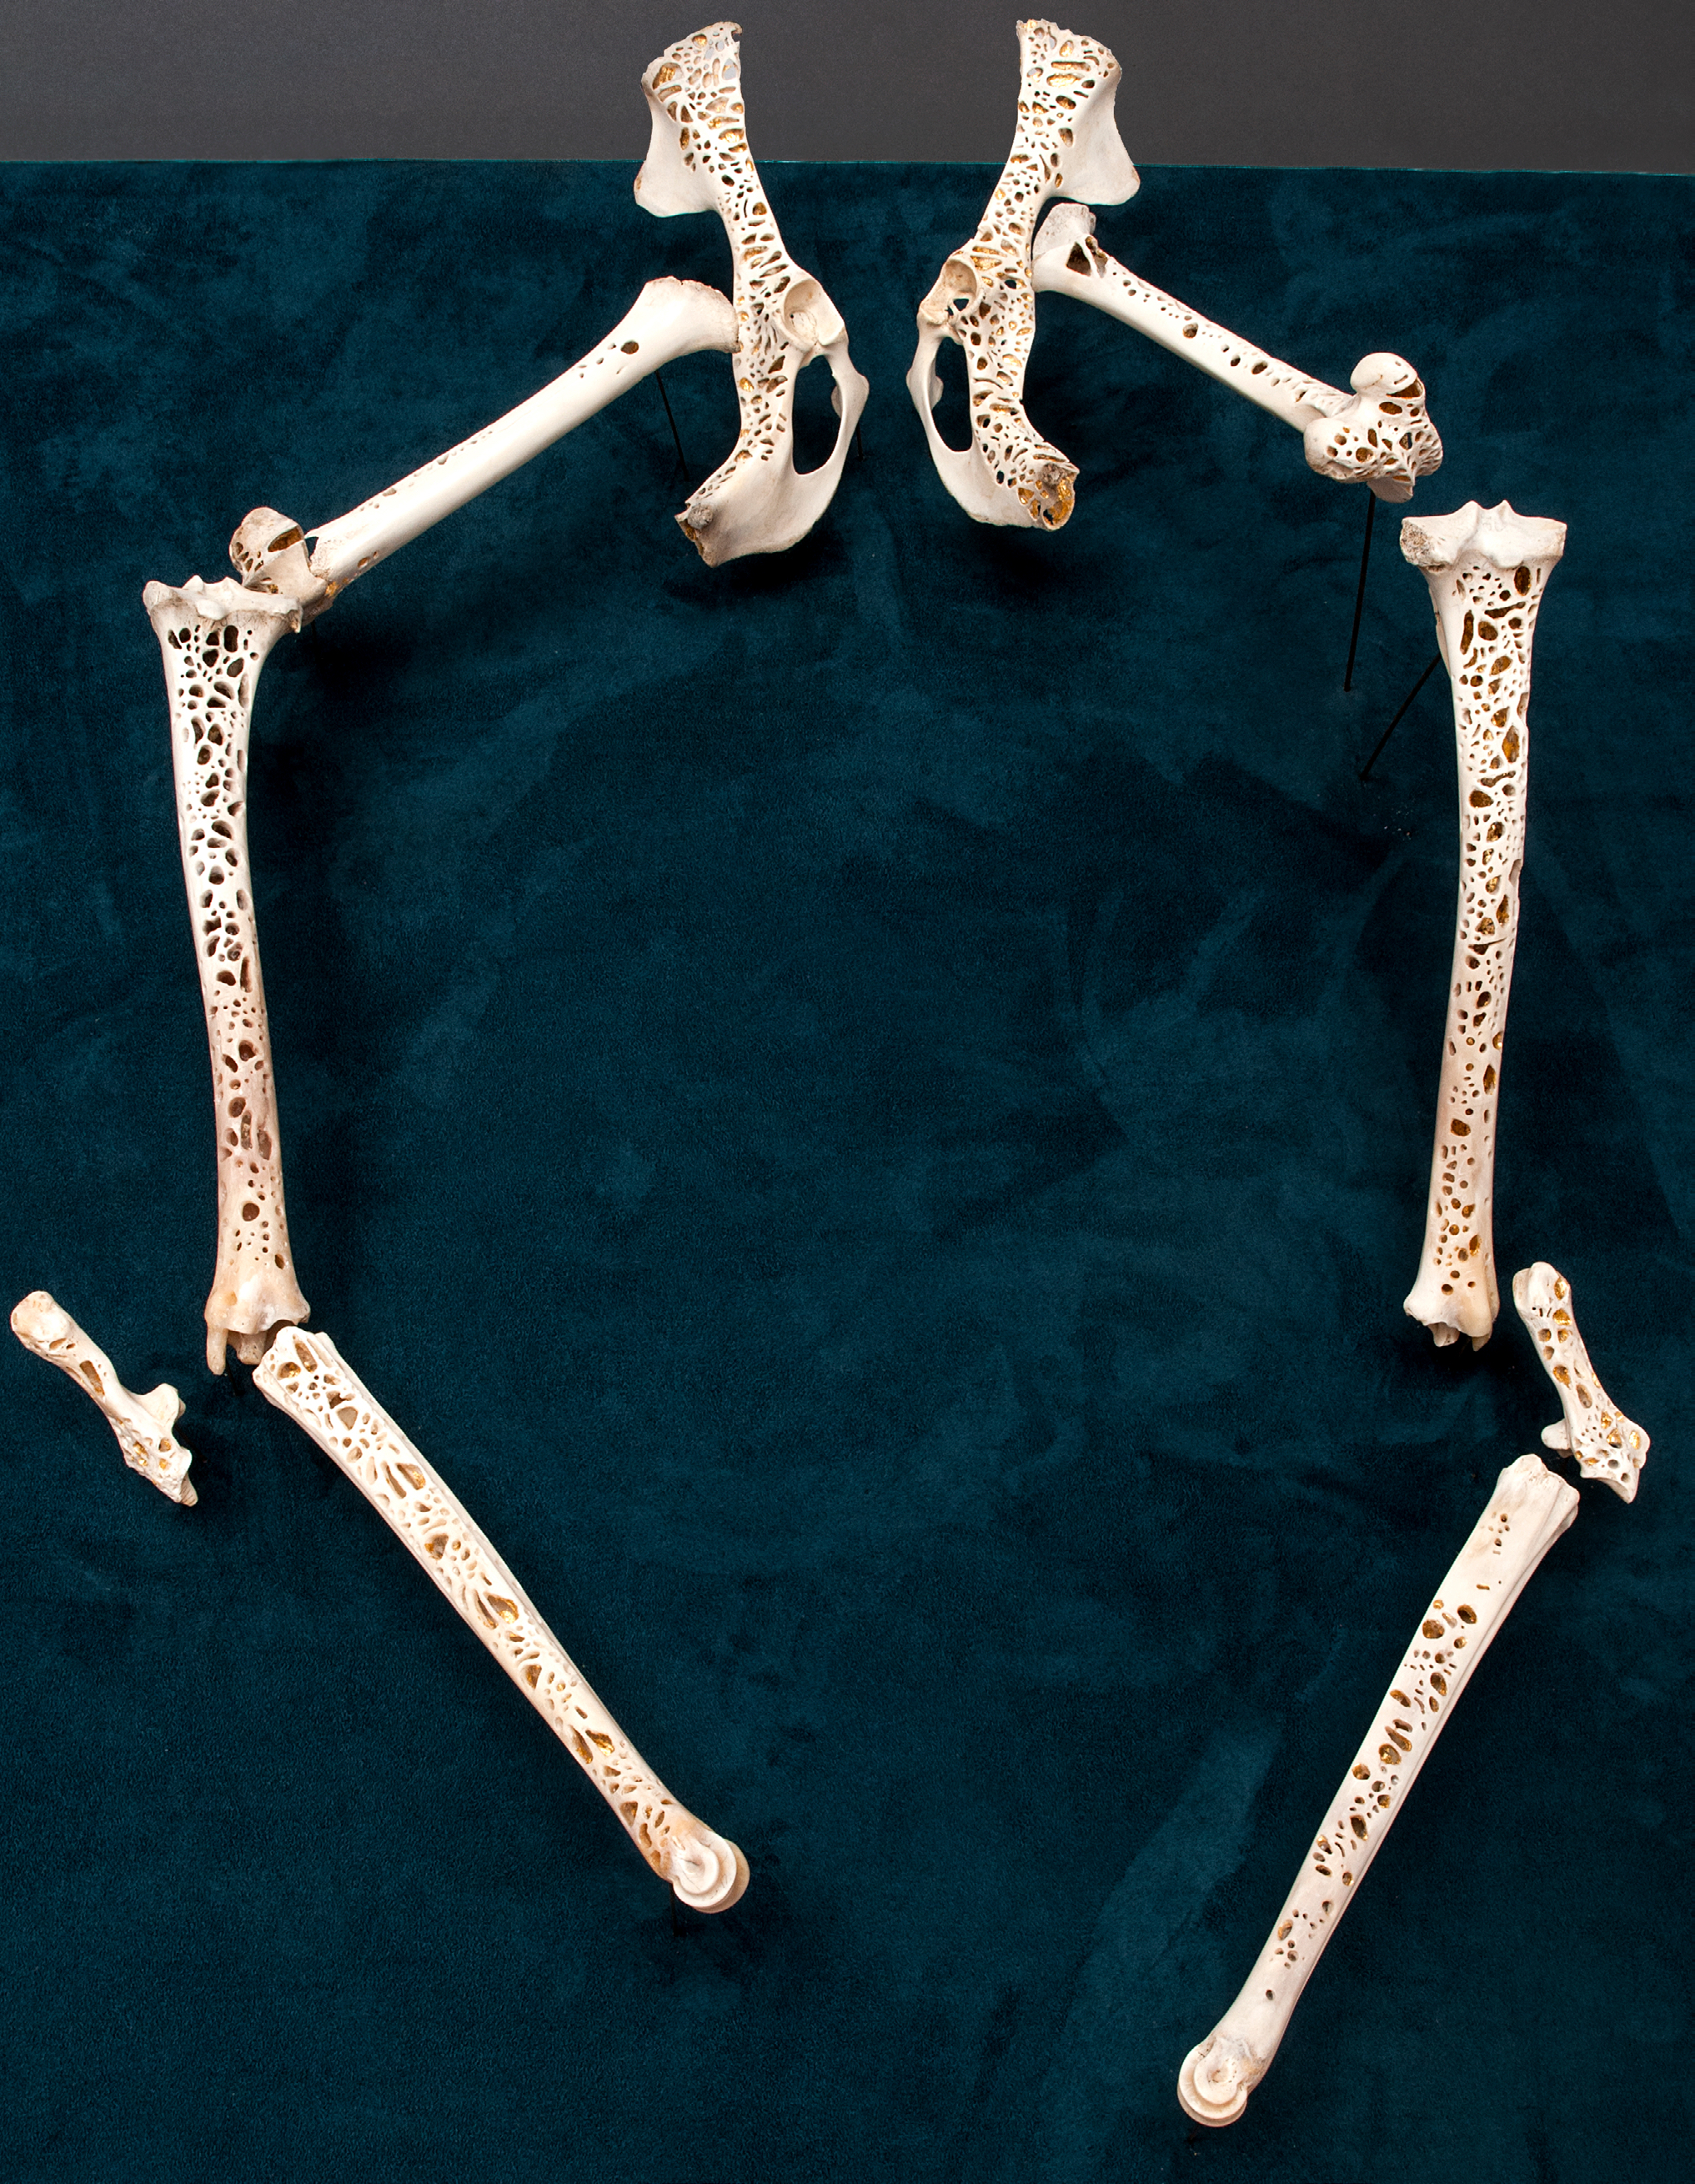 “Cure” detail of pelvis and leg bones. Carved and polished roadkill deer bones, 24 karat gold leaf, by Lee Emma Running, 2016. Photo by Daniel Strong.